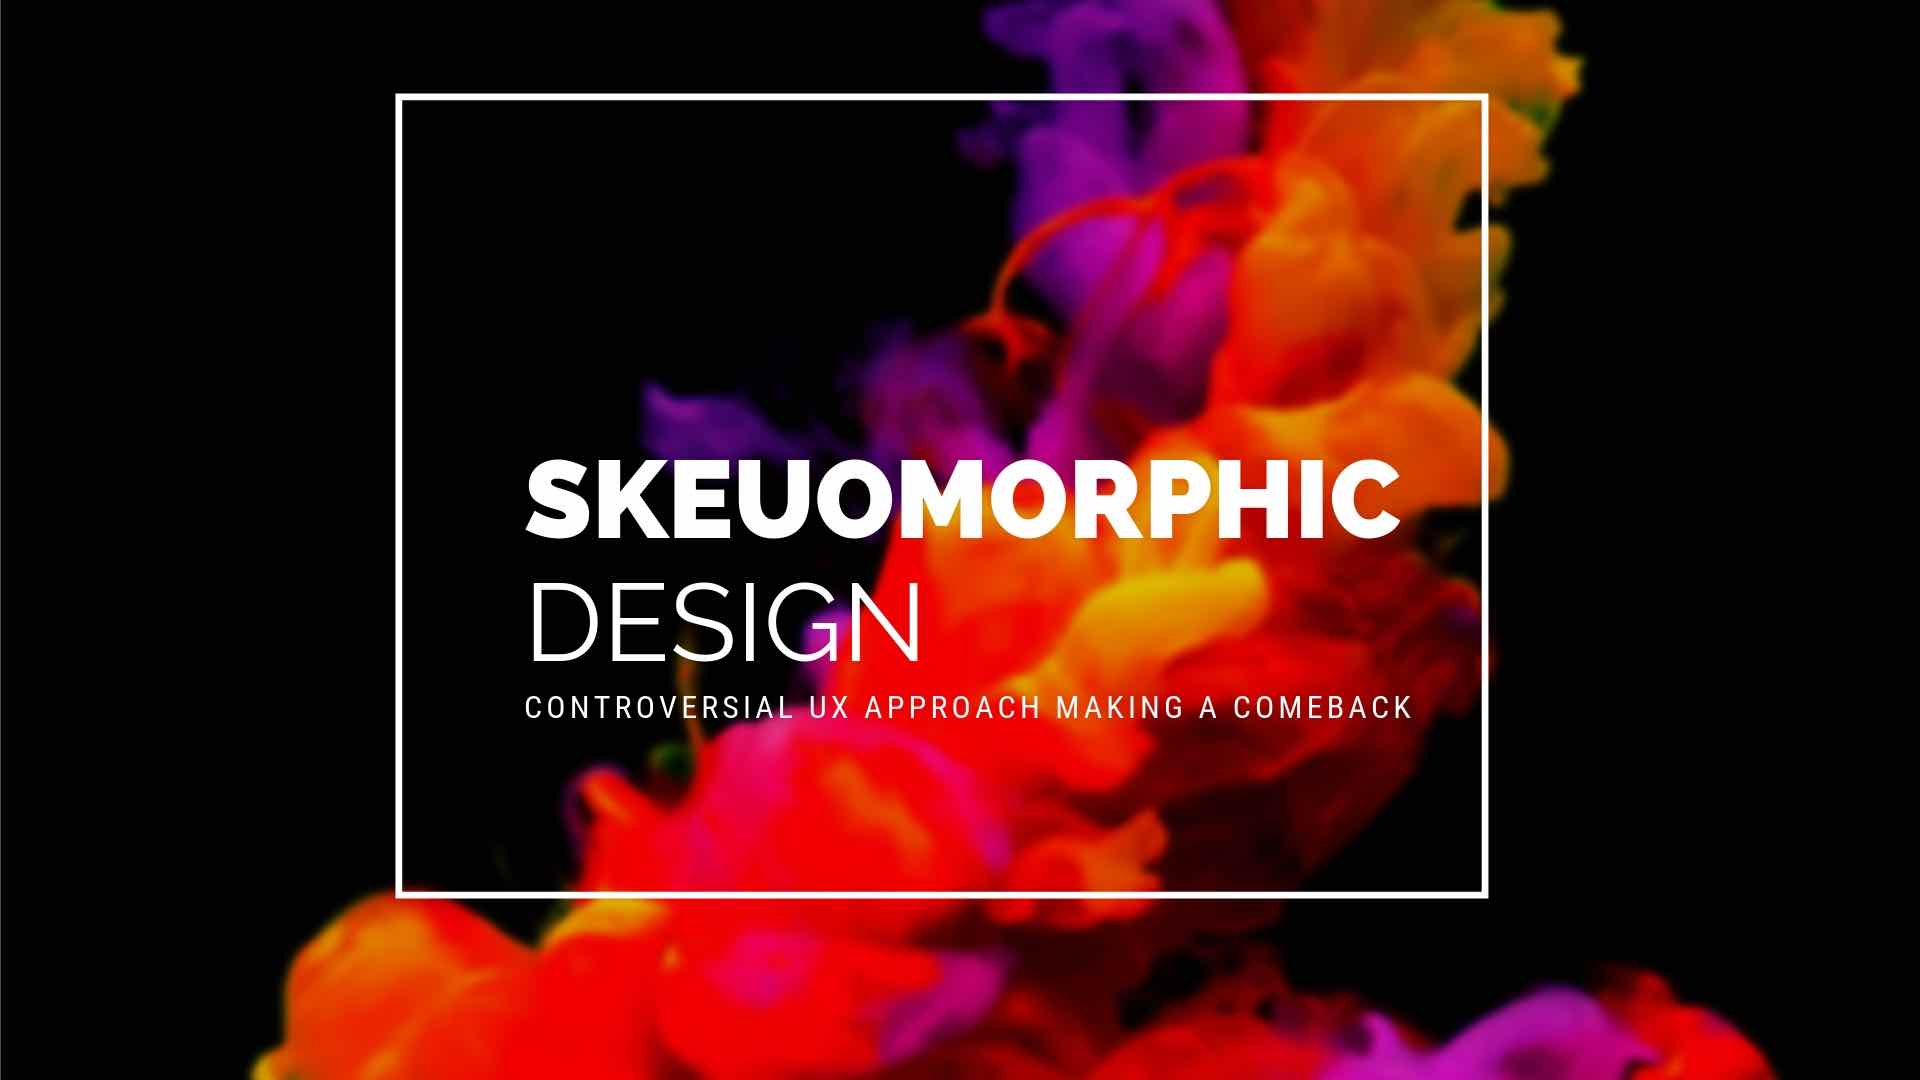 Skeuomorphic Design: A Controversial UX Approach Making a Comeback